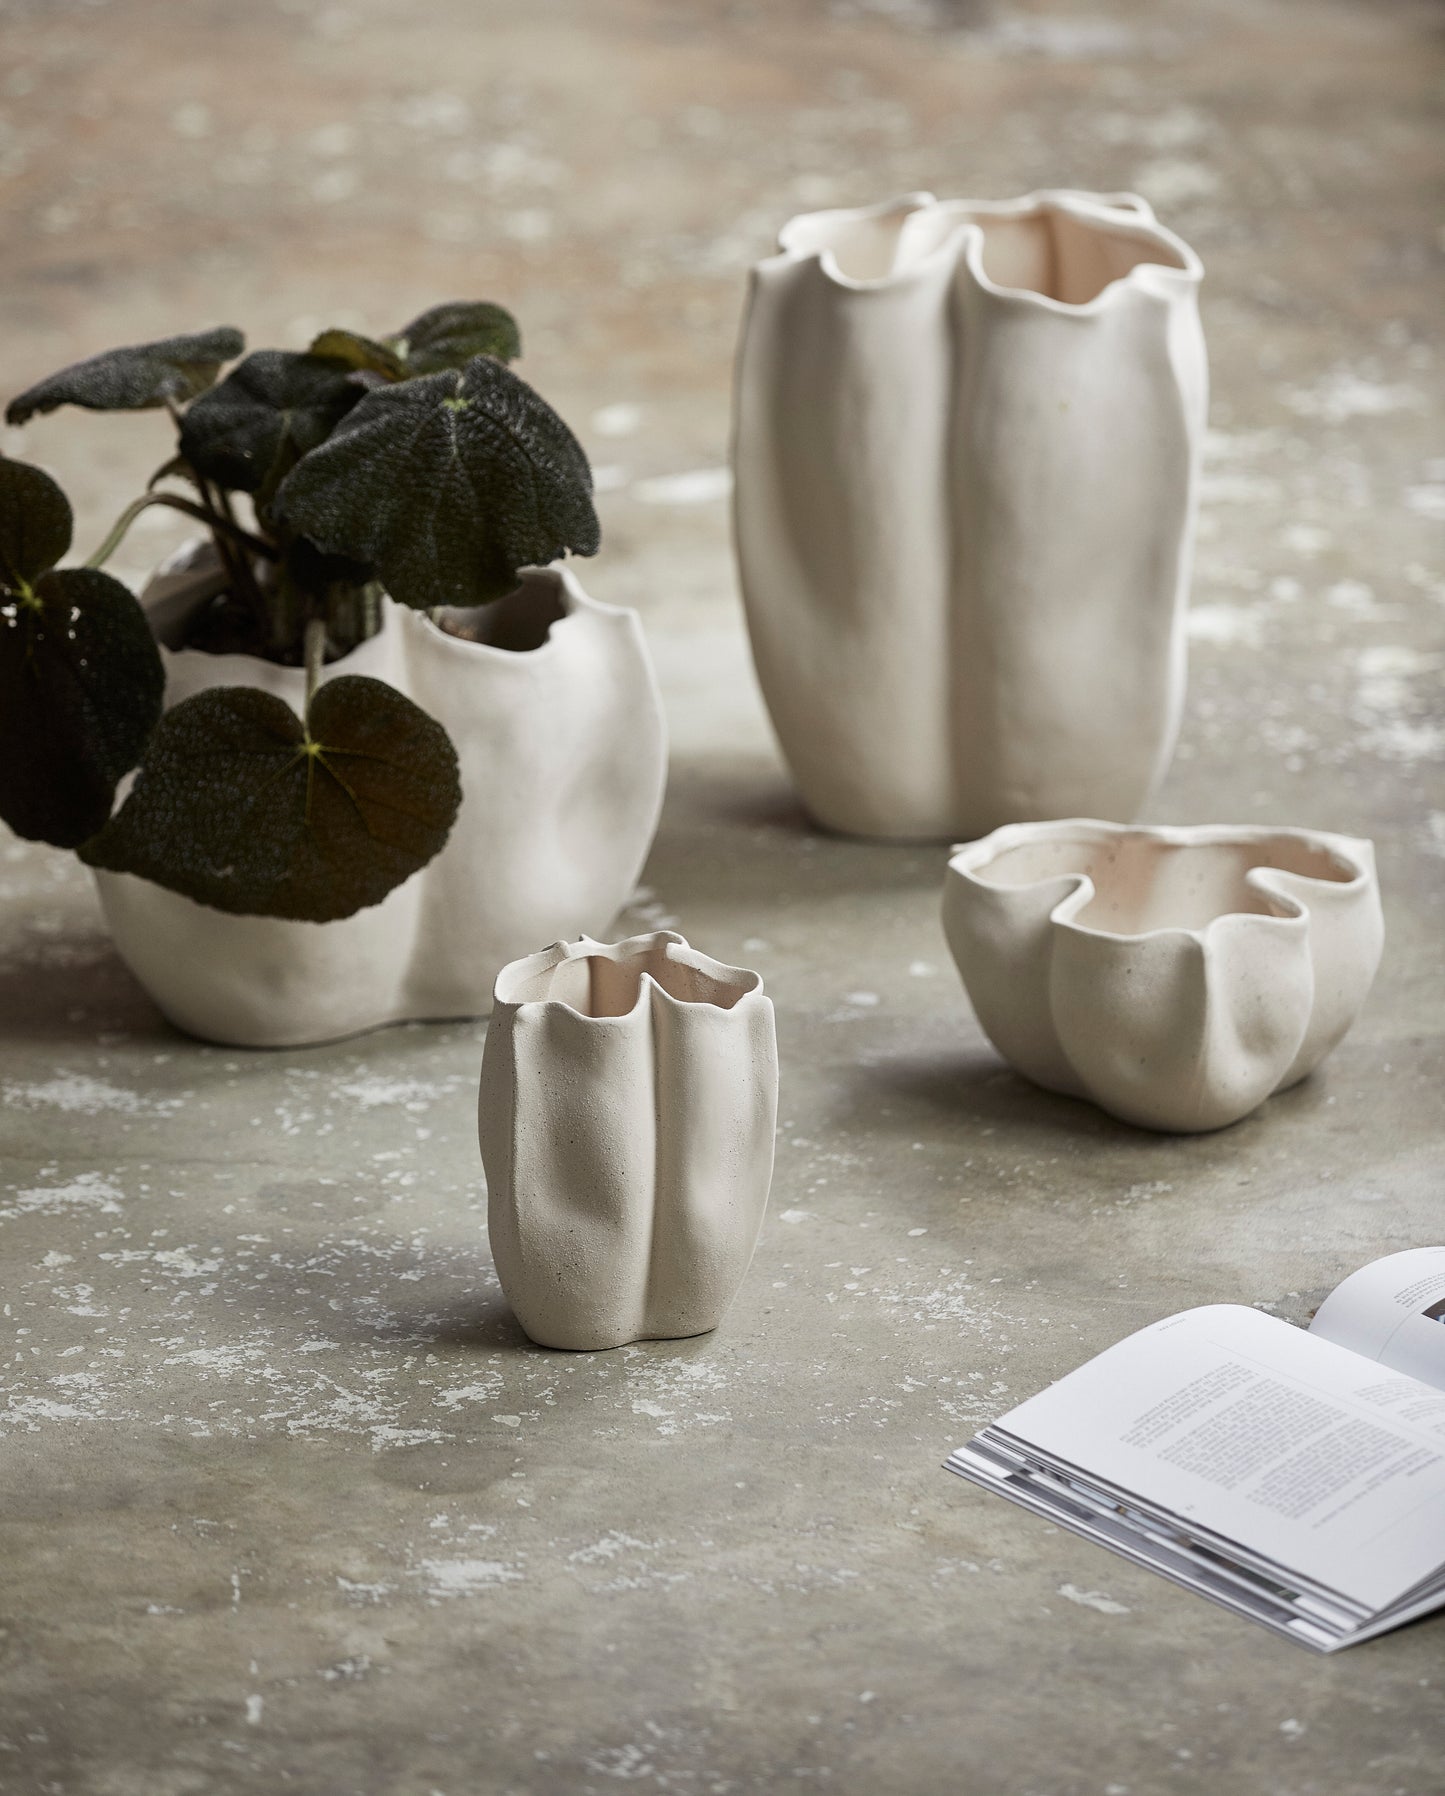 Decorative ceramic vessel